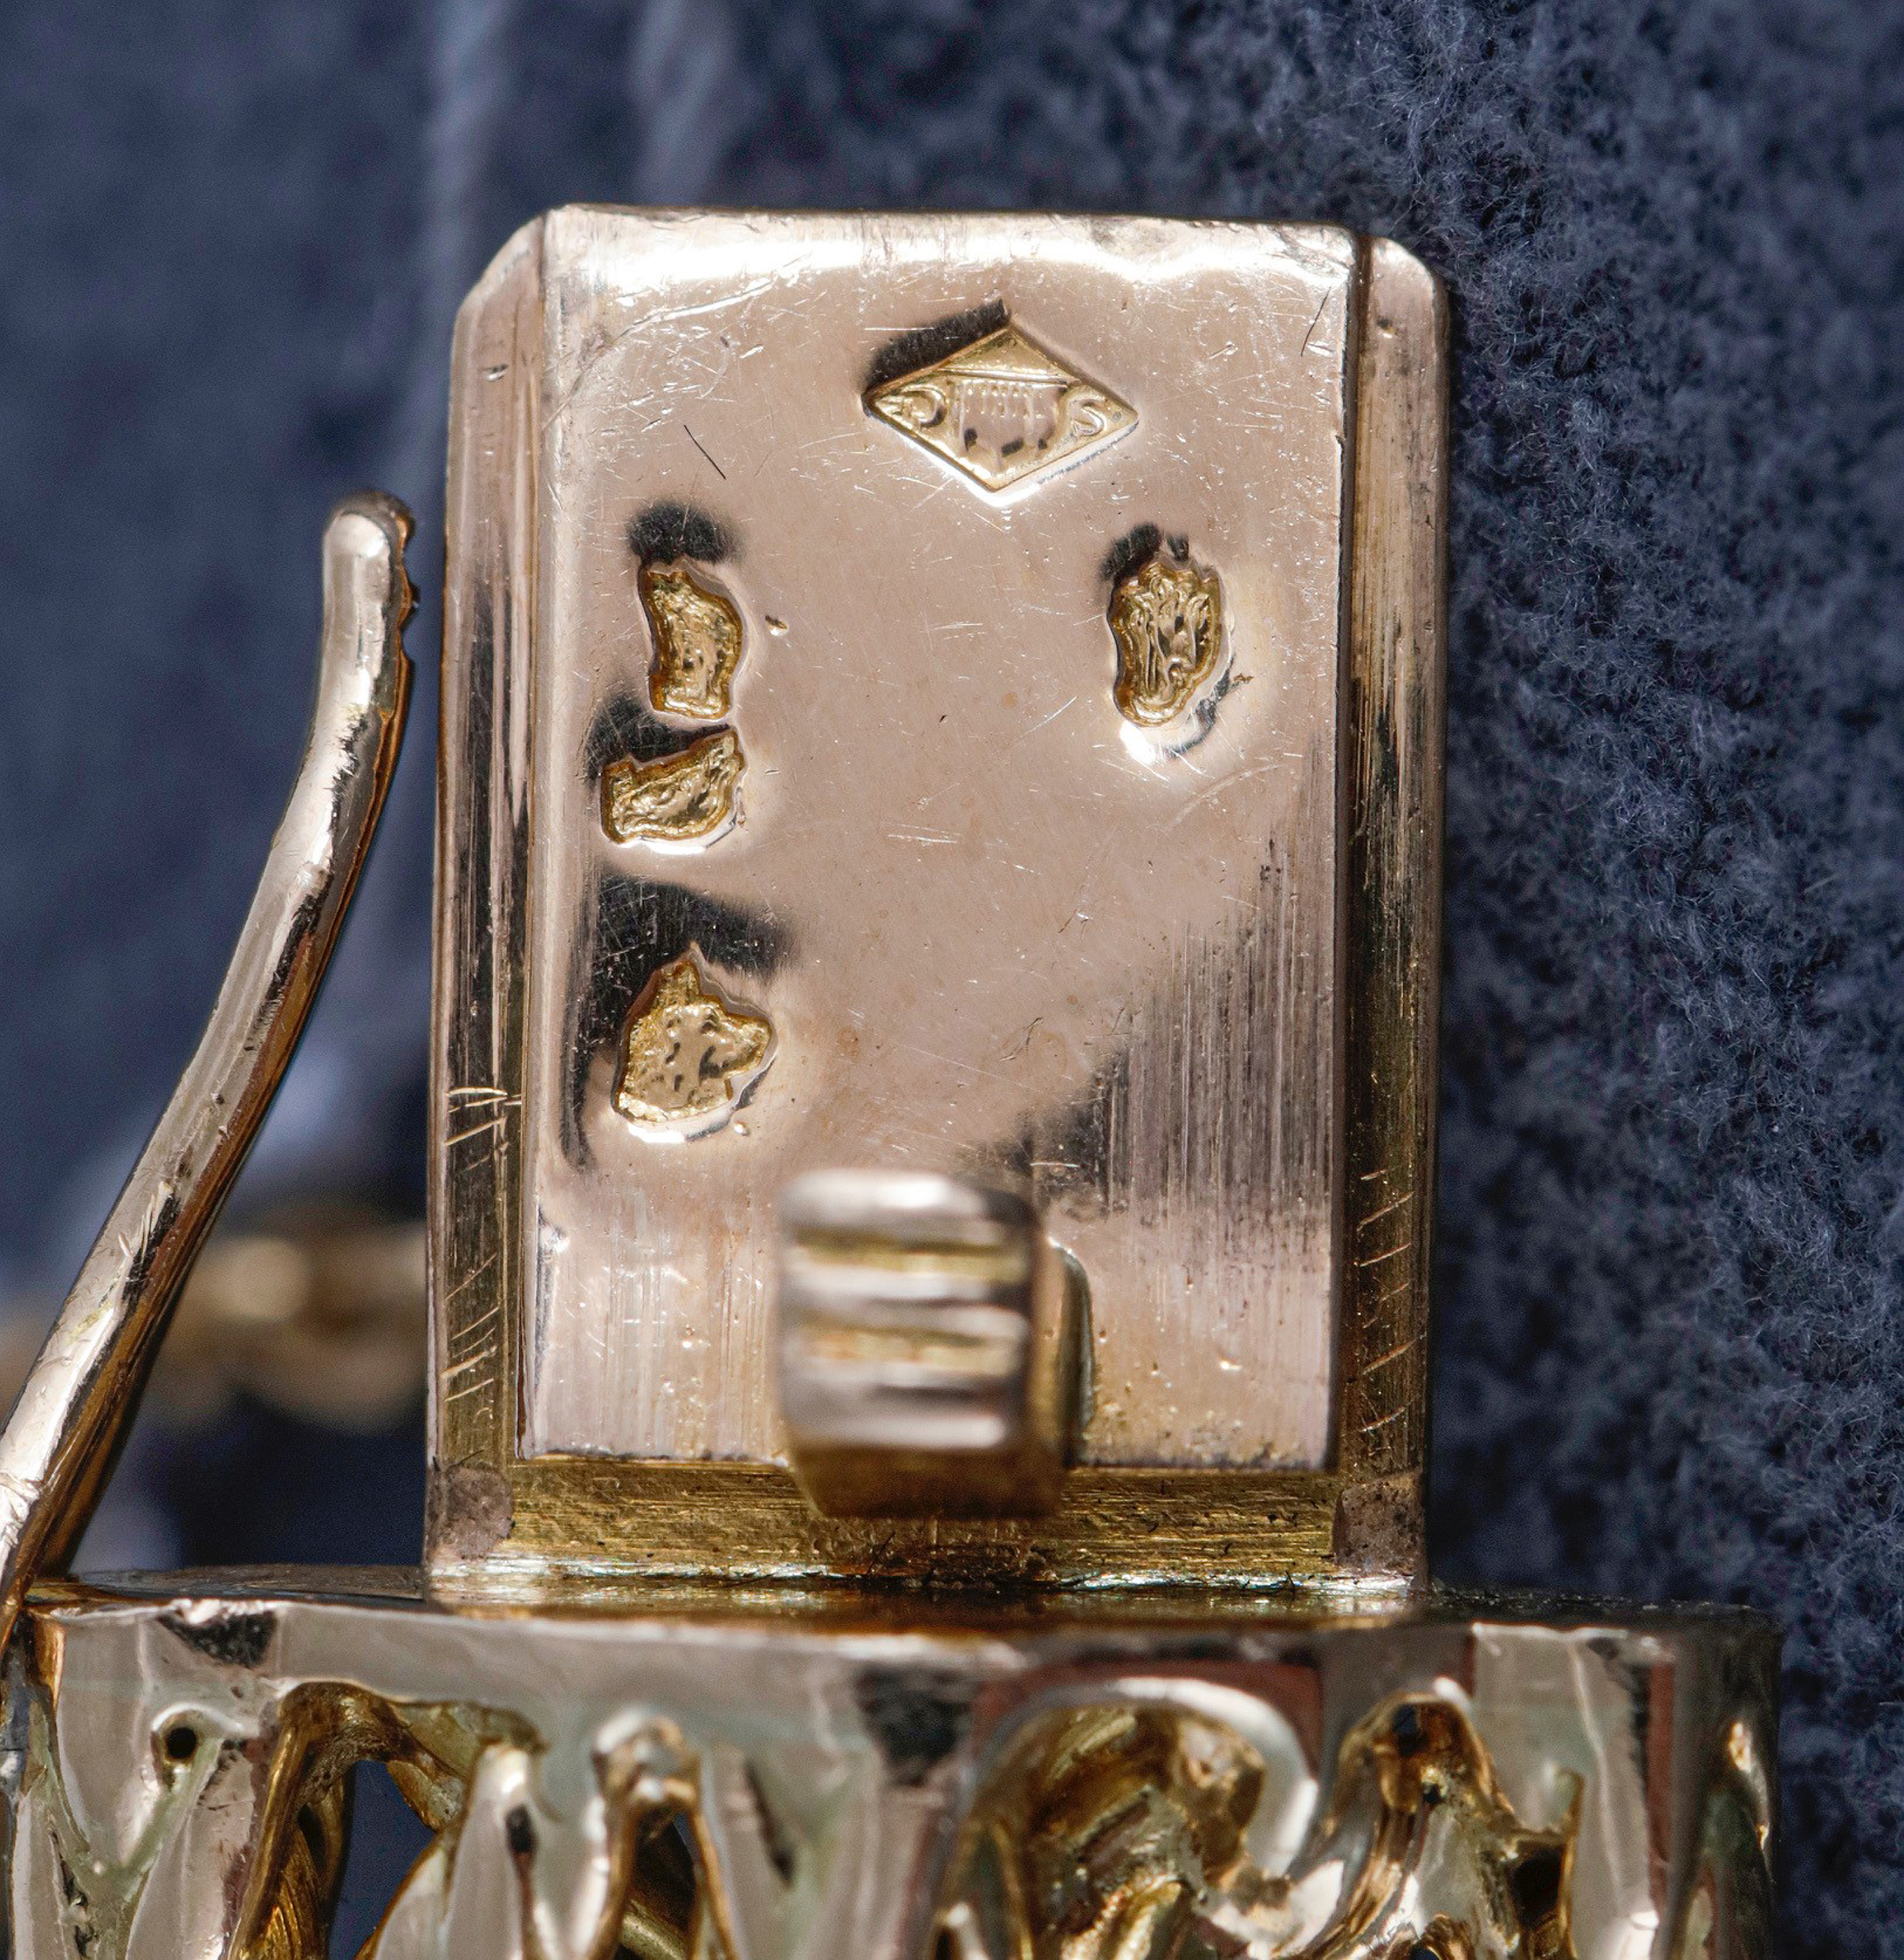 A RARE DIAMOND AND GOLD BRACELET, BY STERLÉ, CIRCA 1950 The flexible bracelet designed as - Image 8 of 8